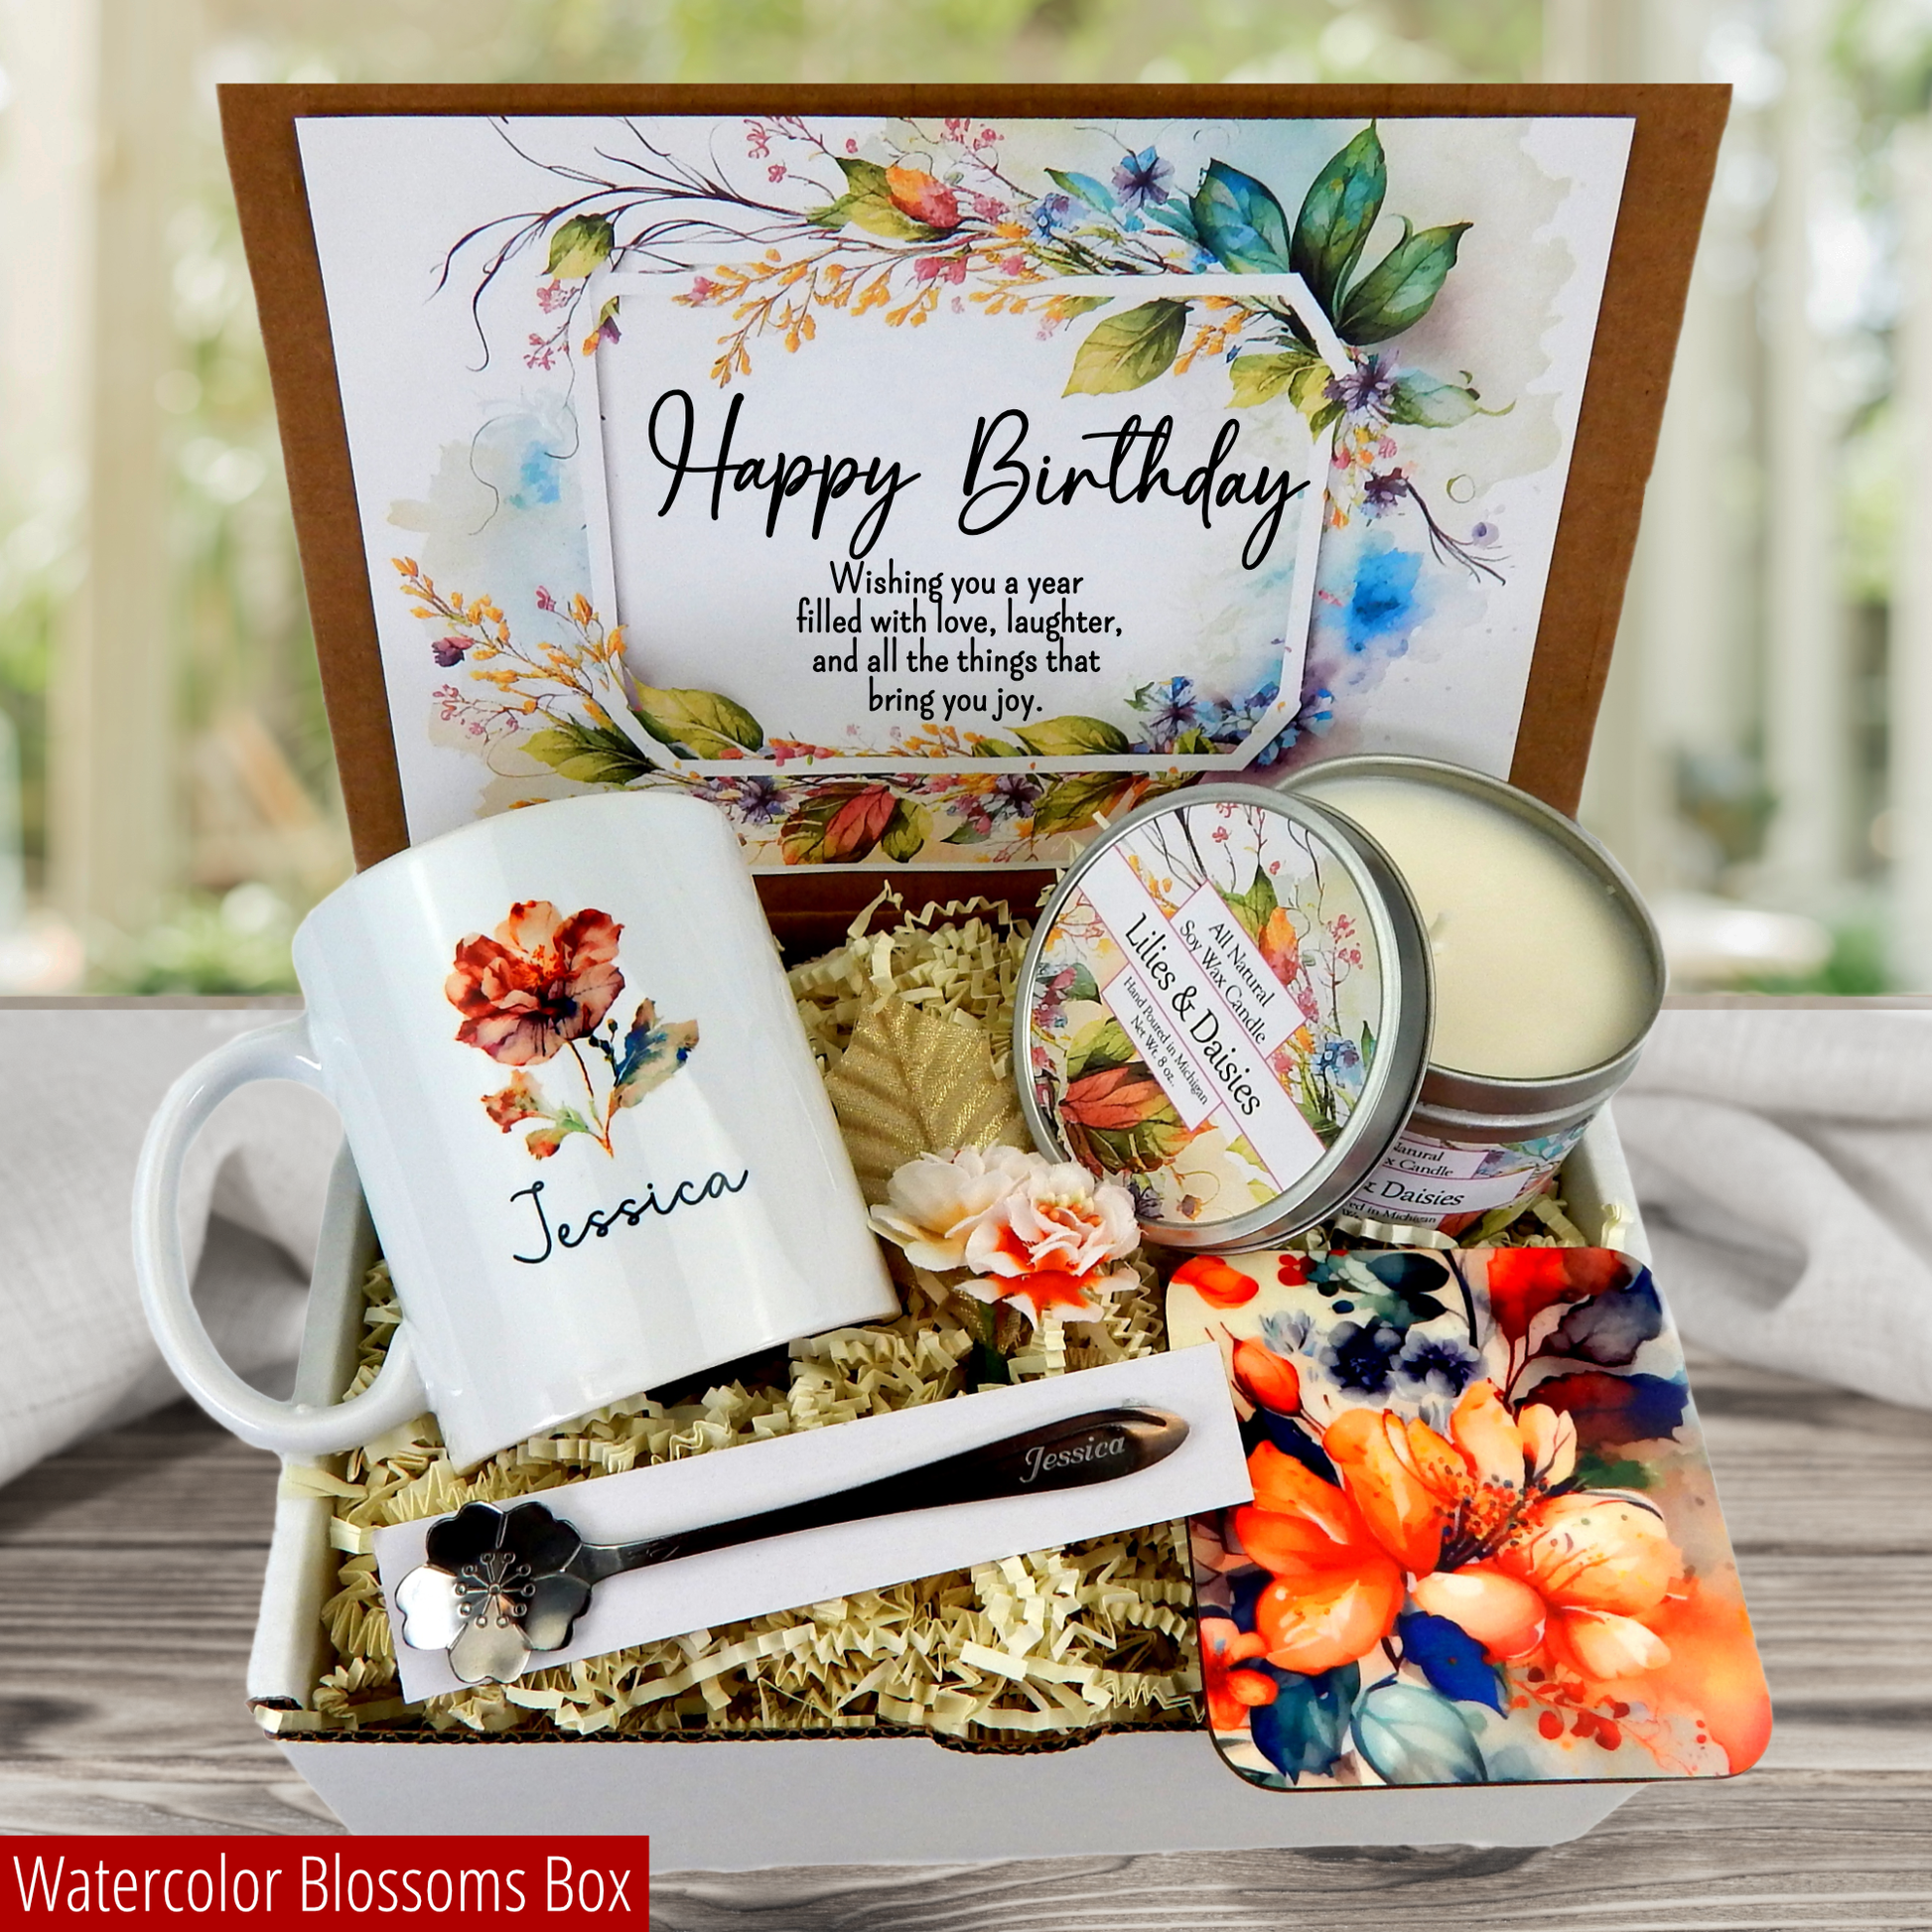 Happy Birthday Gift Basket for Women